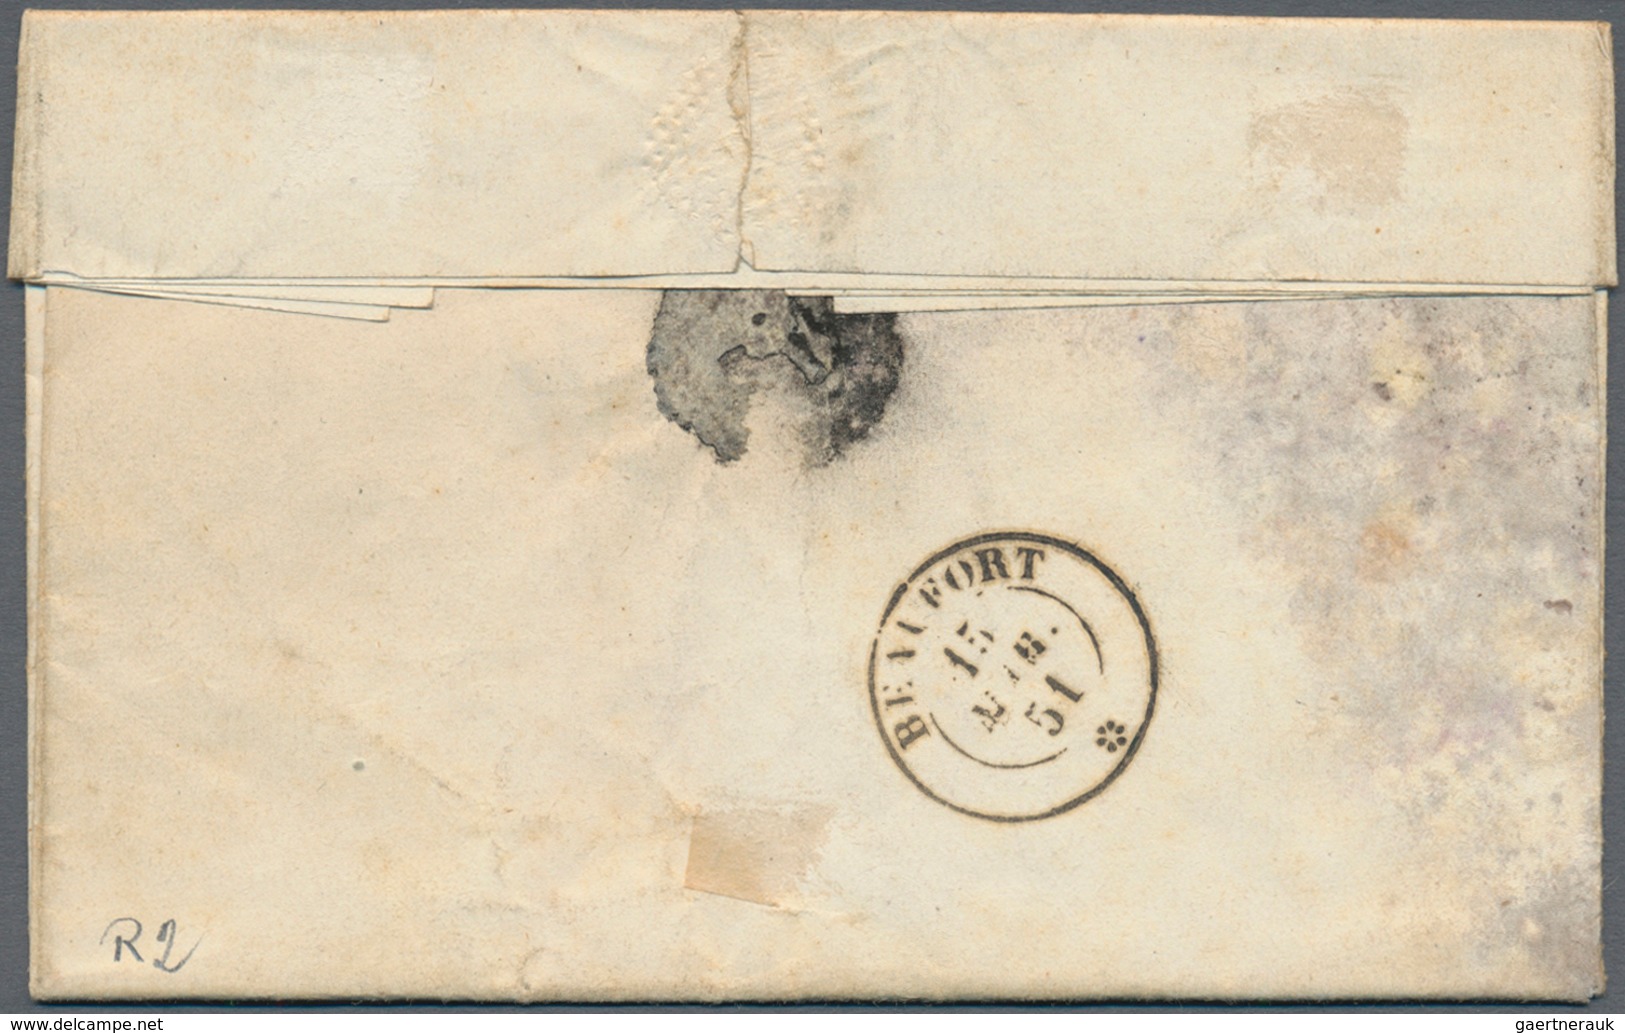 00802 Italien - Altitalienische Staaten: Sardinien: 1851, 20 Cents Blue, On A Letter Dated March 15, 1851 - Sardinia